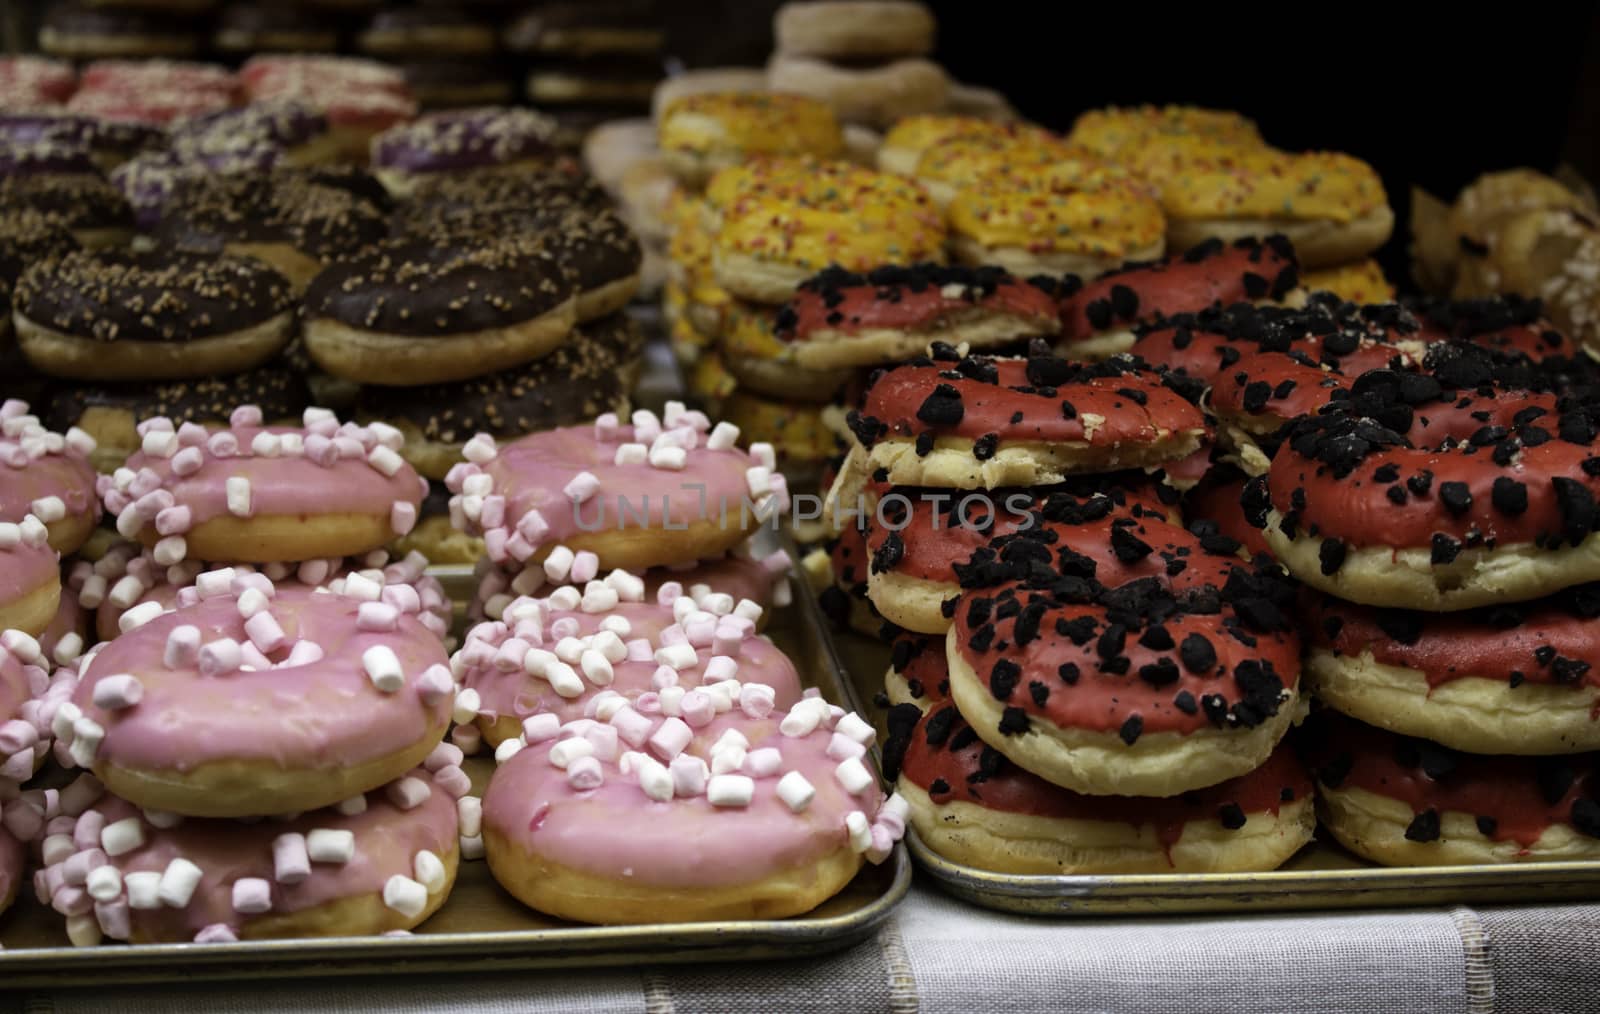 Caramel chocolate donuts by celiafoto